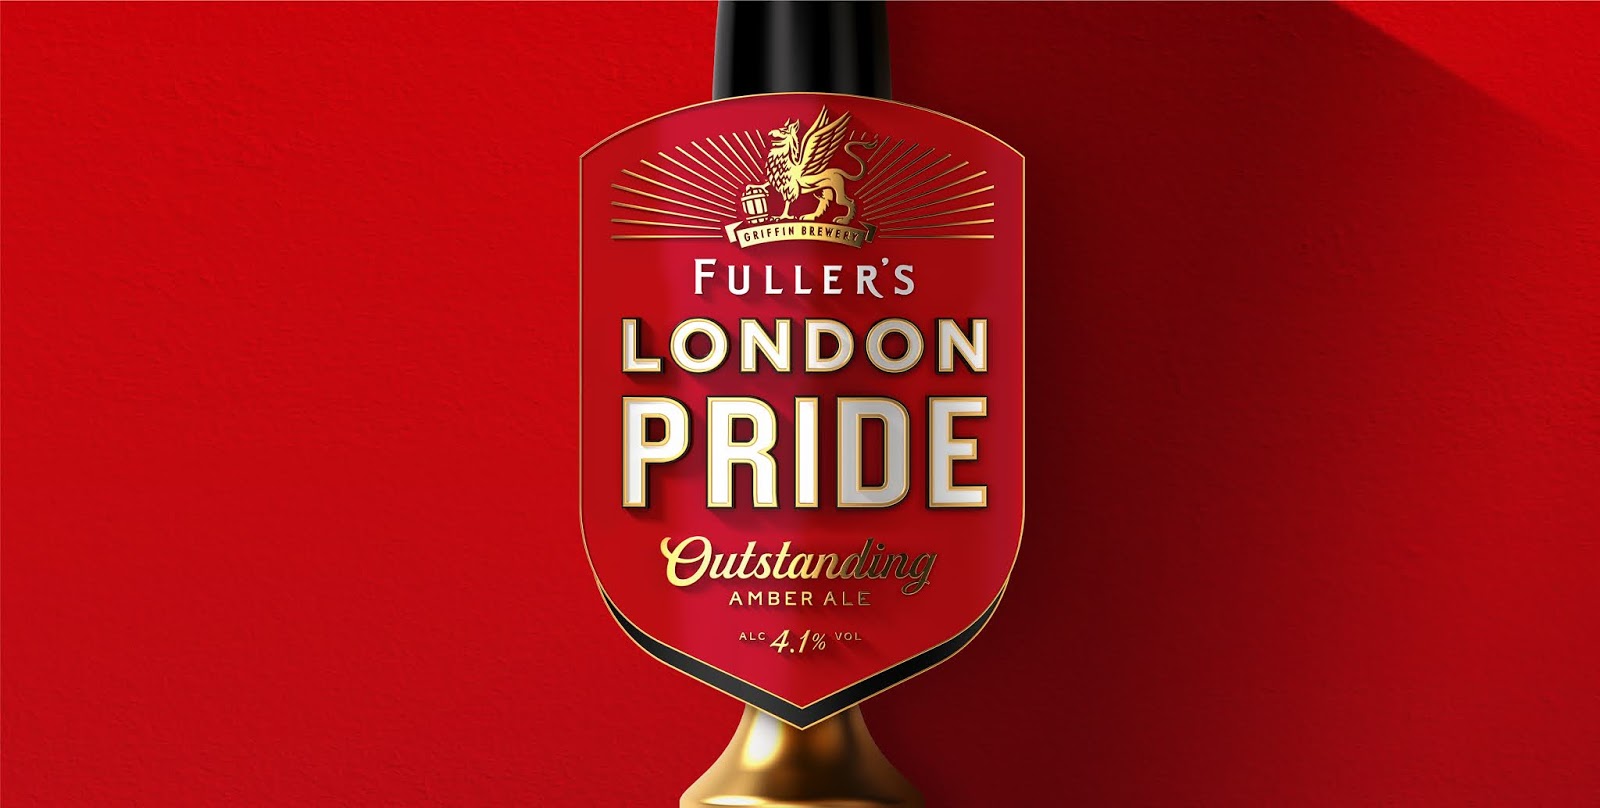 Fuller's London Pride